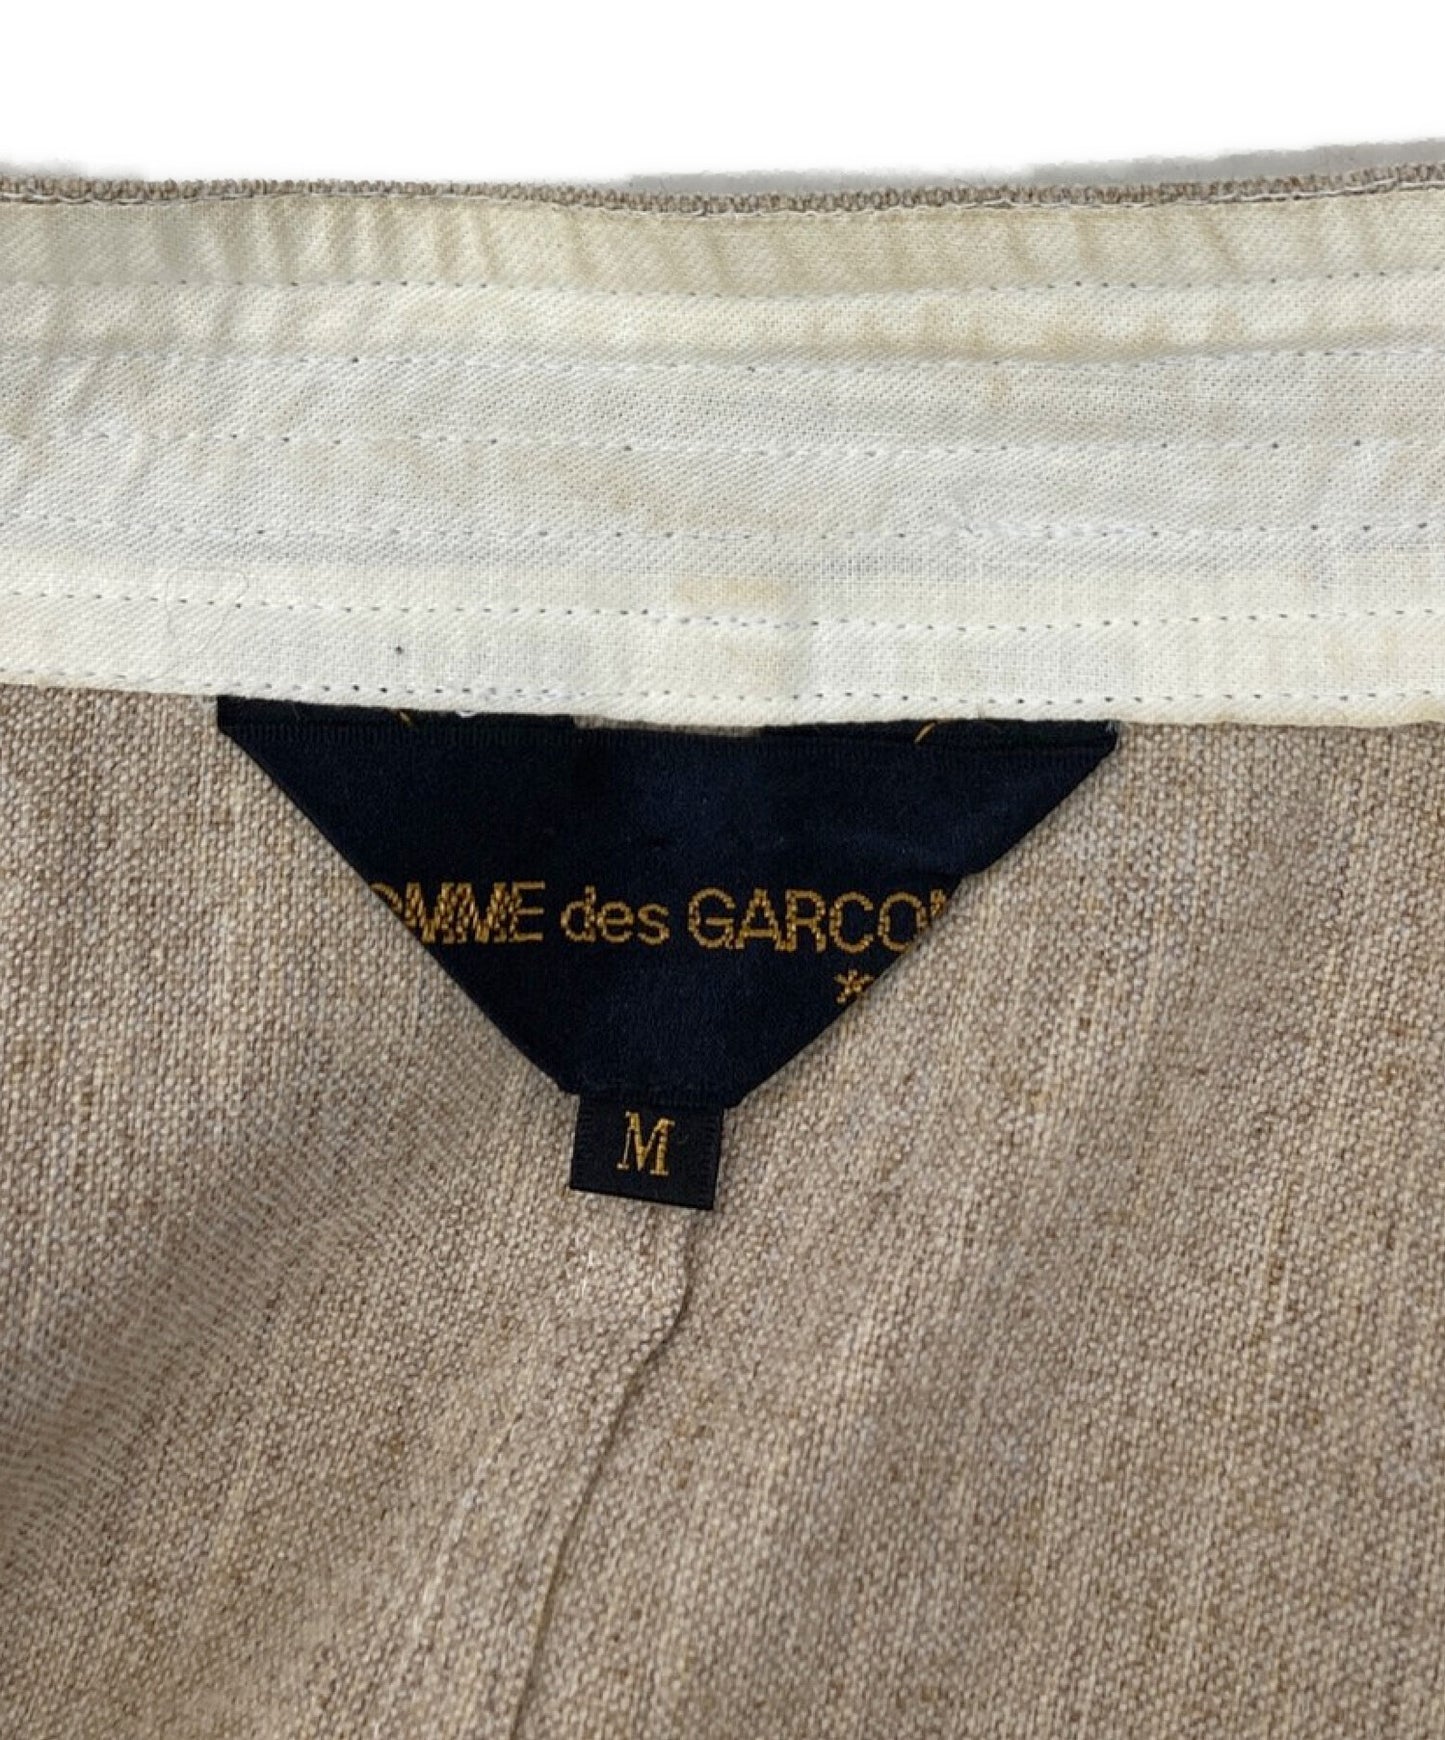 Comme des Garcons Bicolored Jacket/Design Jacket GJ-04014M